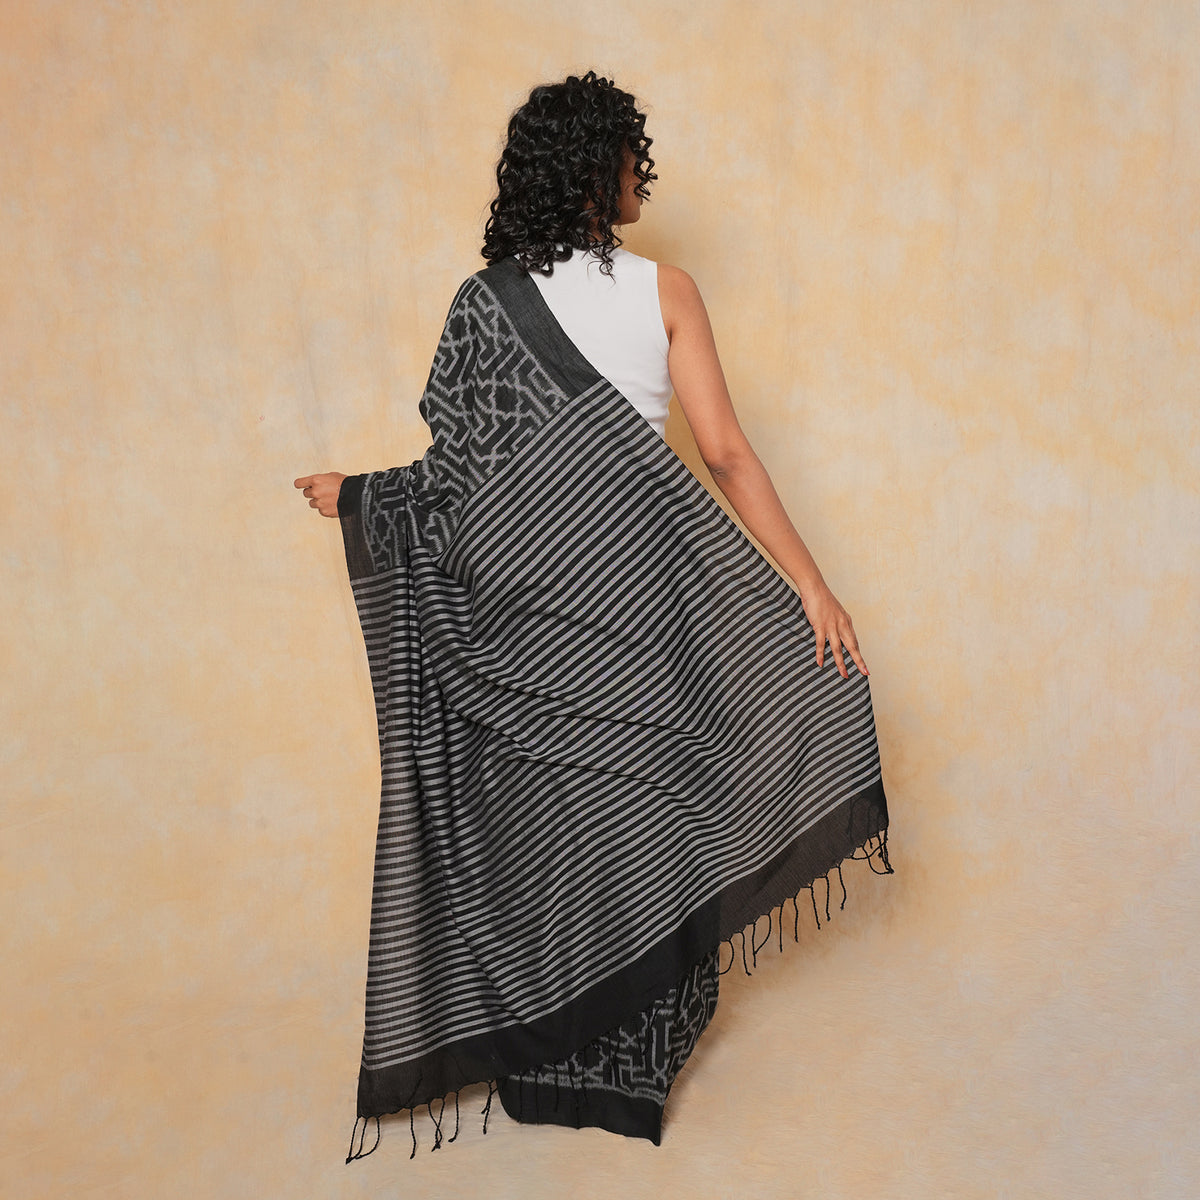 CHARBHUJA Handloom Cotton Saree - Black and White